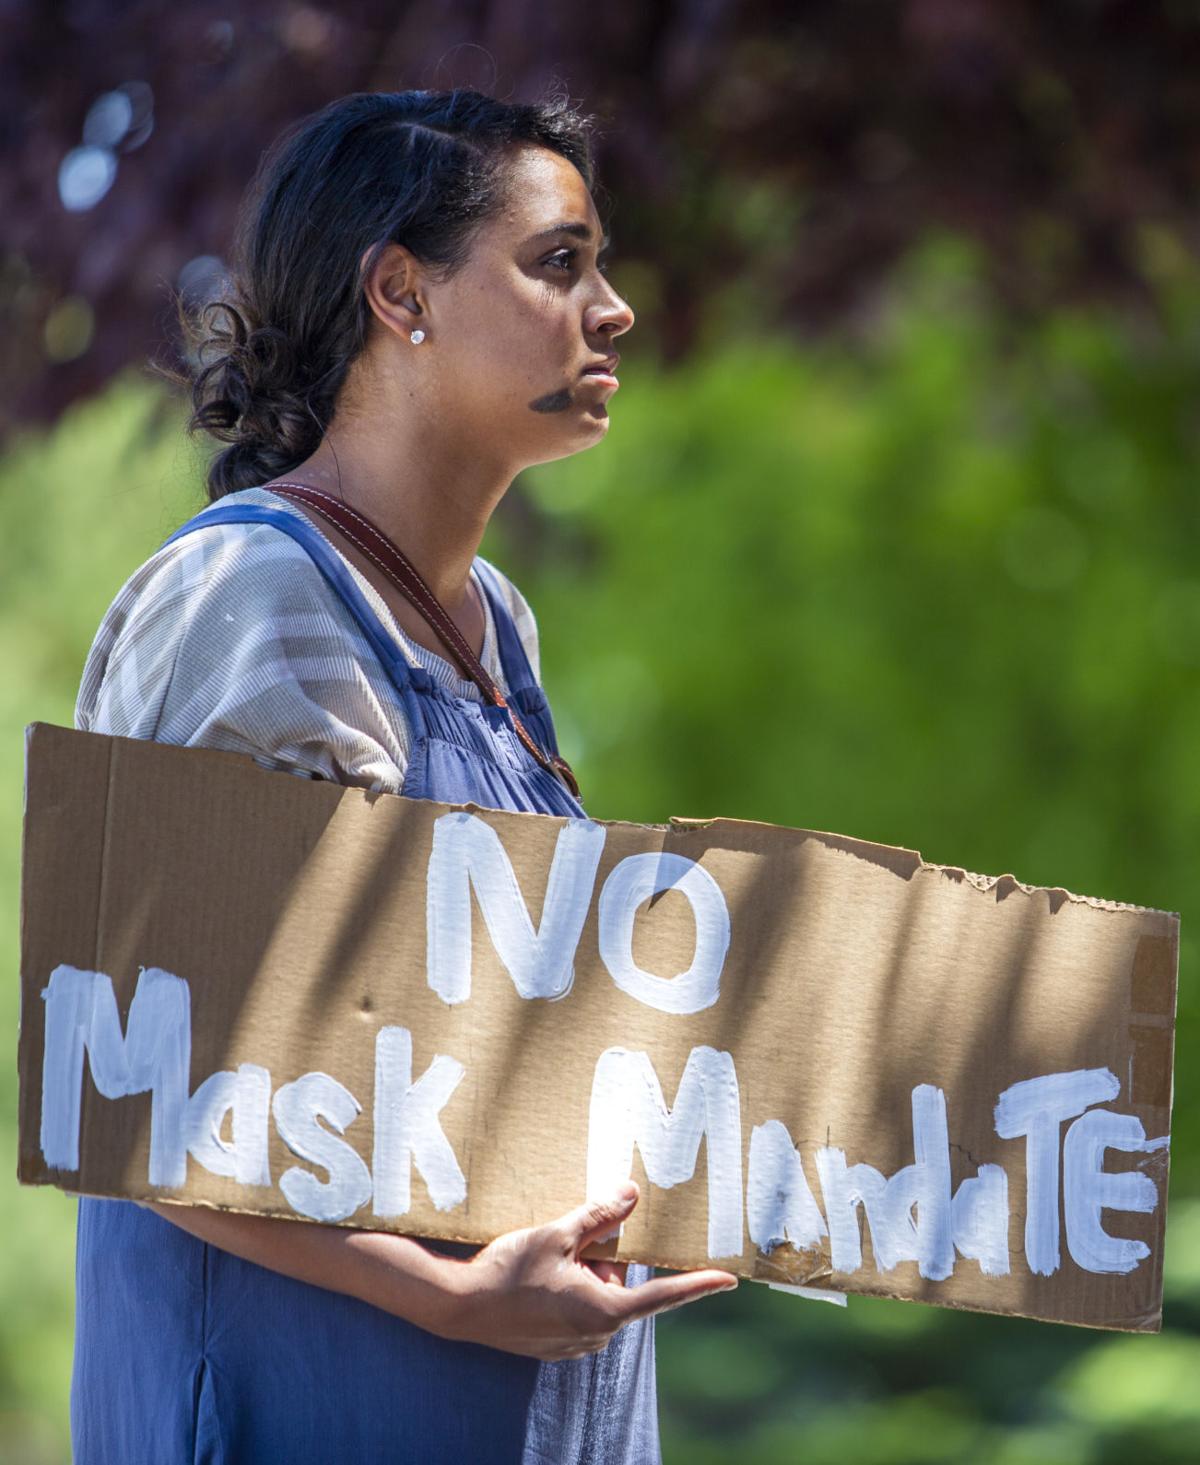 Protesting mandatory masks